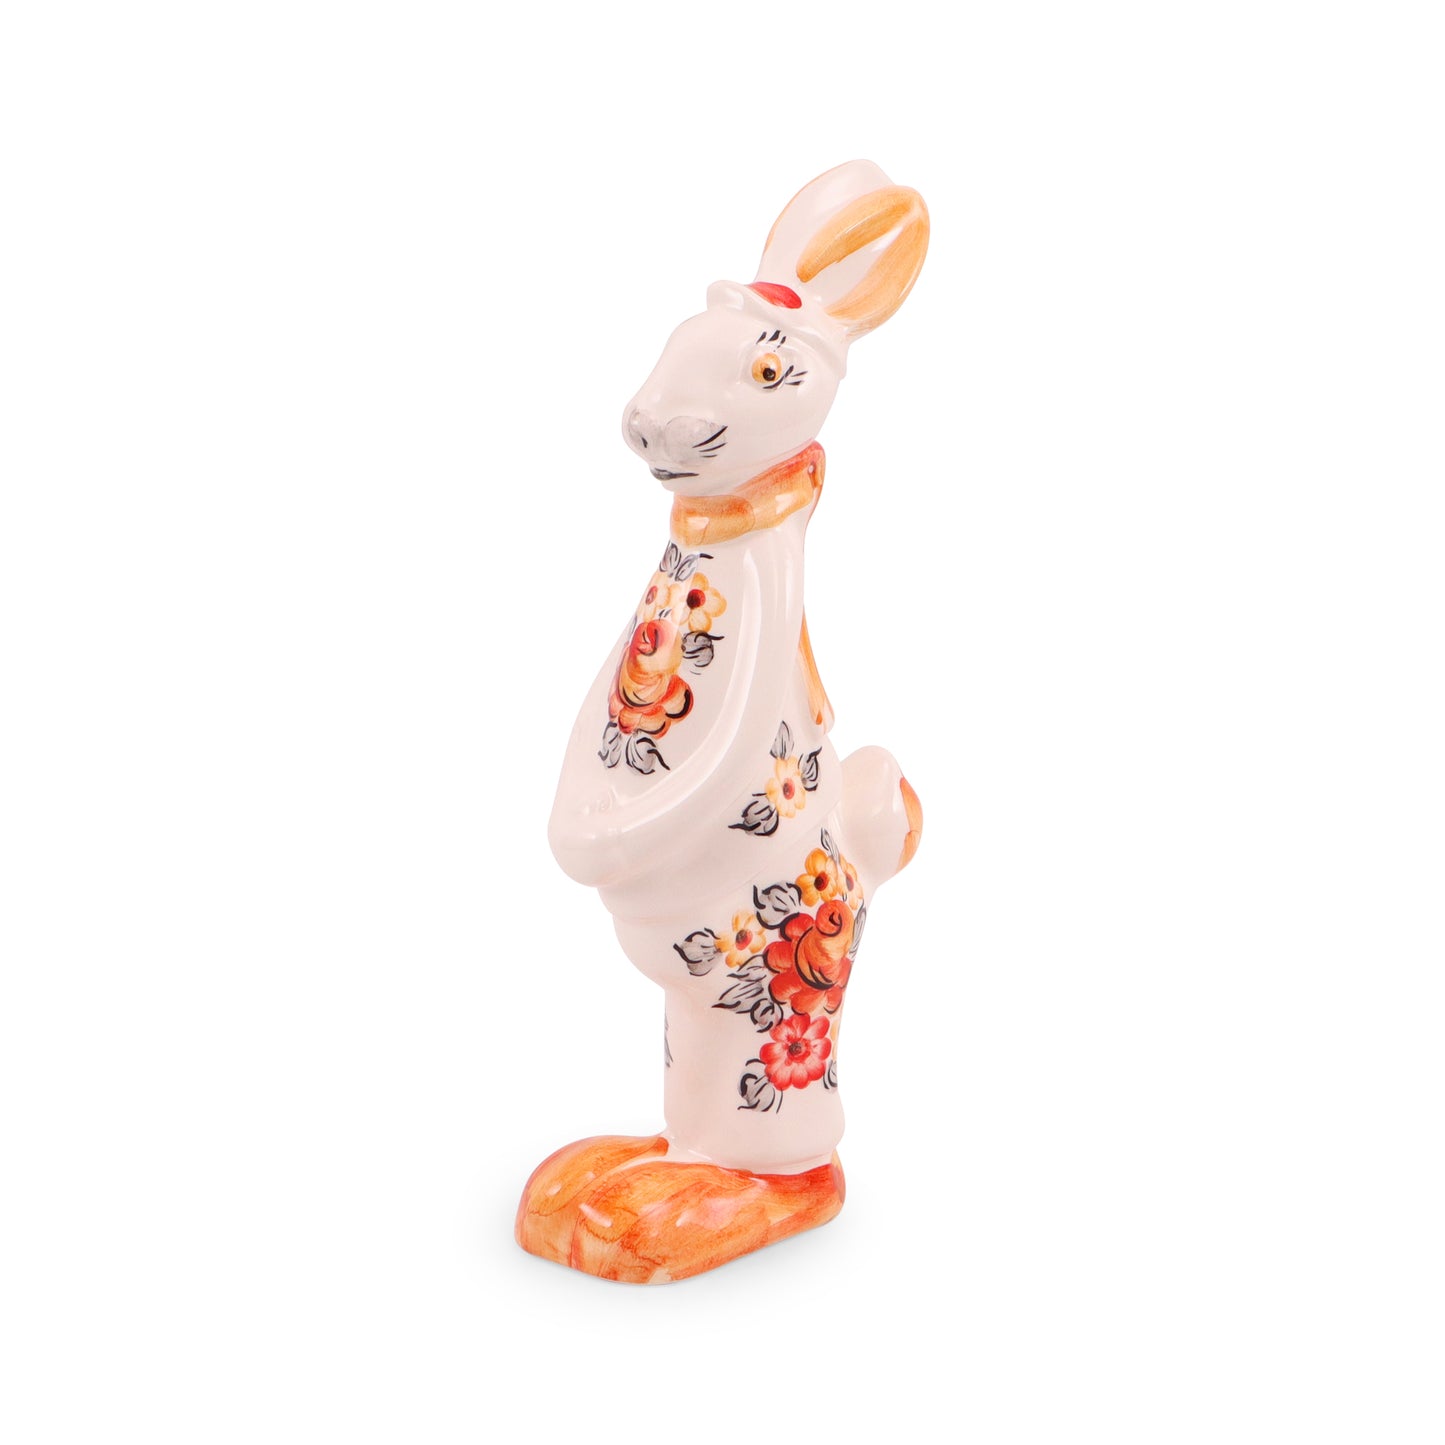 11" Bunny Boy Figurine. Pattern: Orange